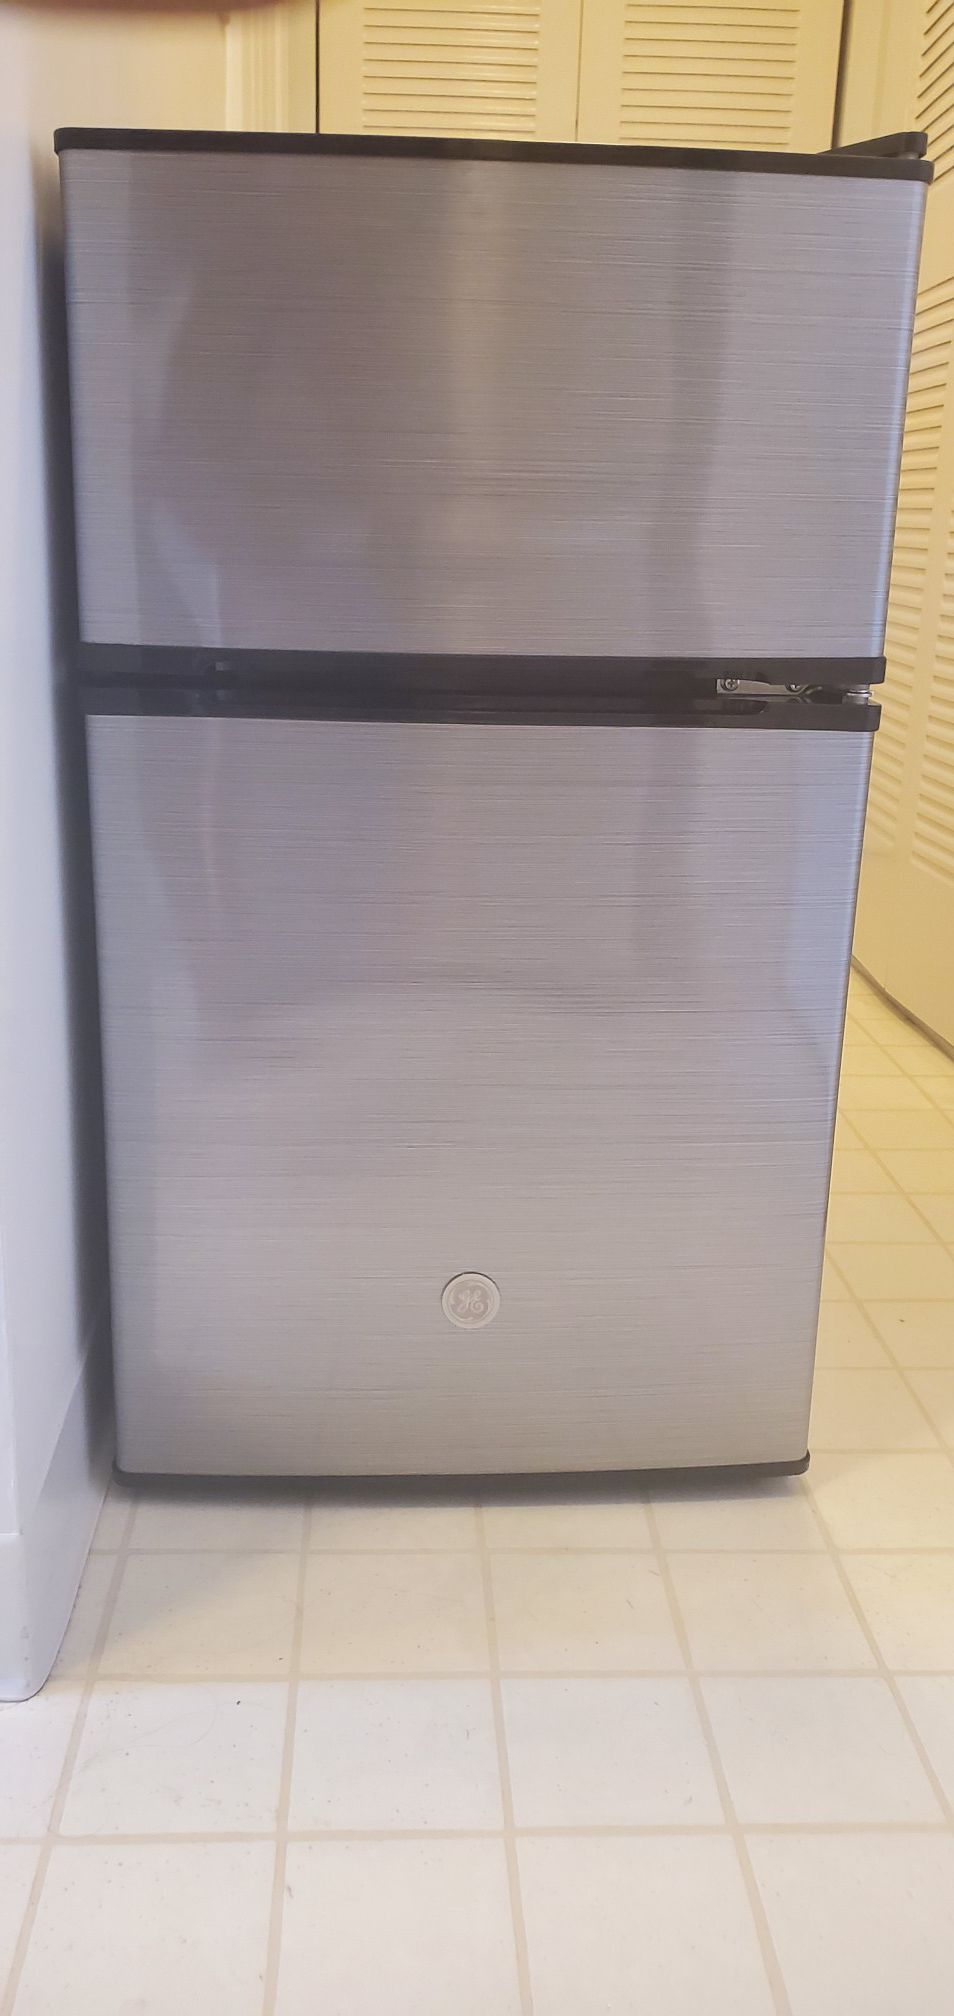 GE mini fridge/freezer